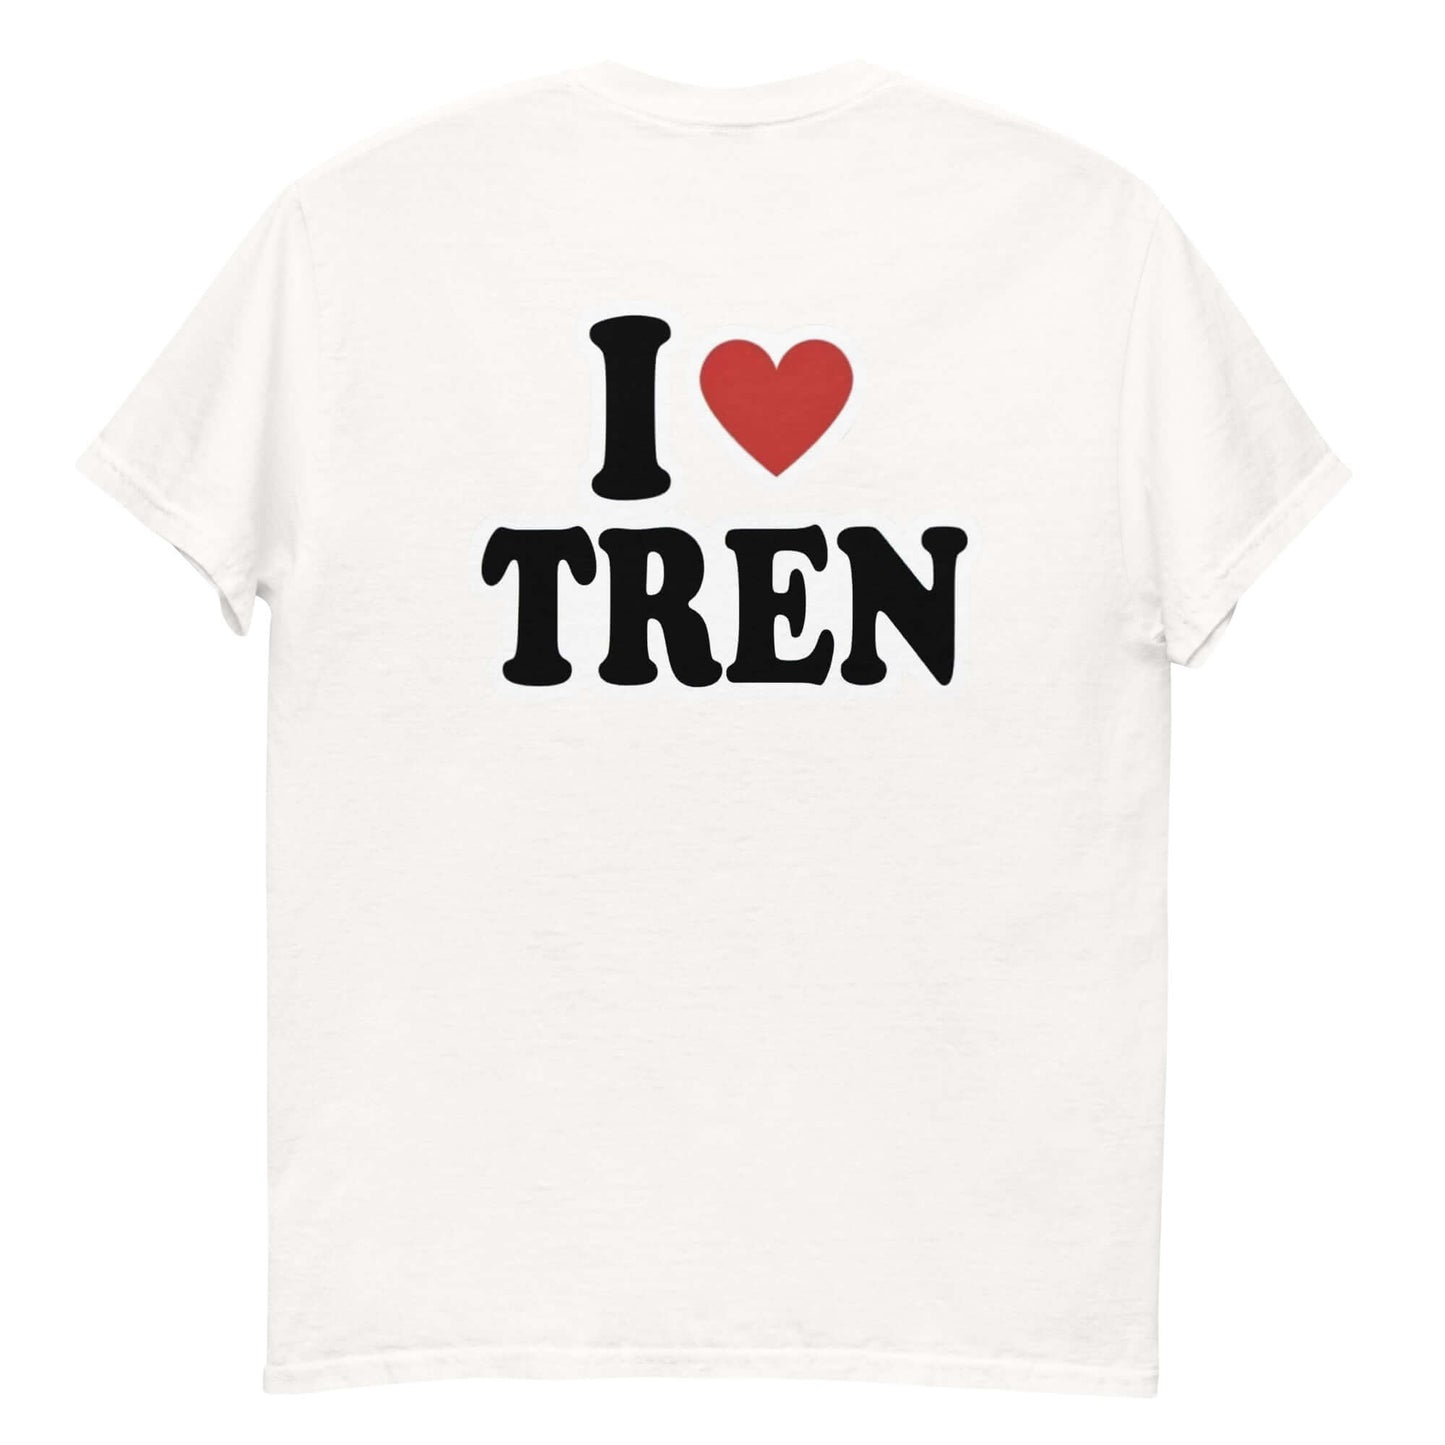 "I <3 Tren" - Classic T-Shirt